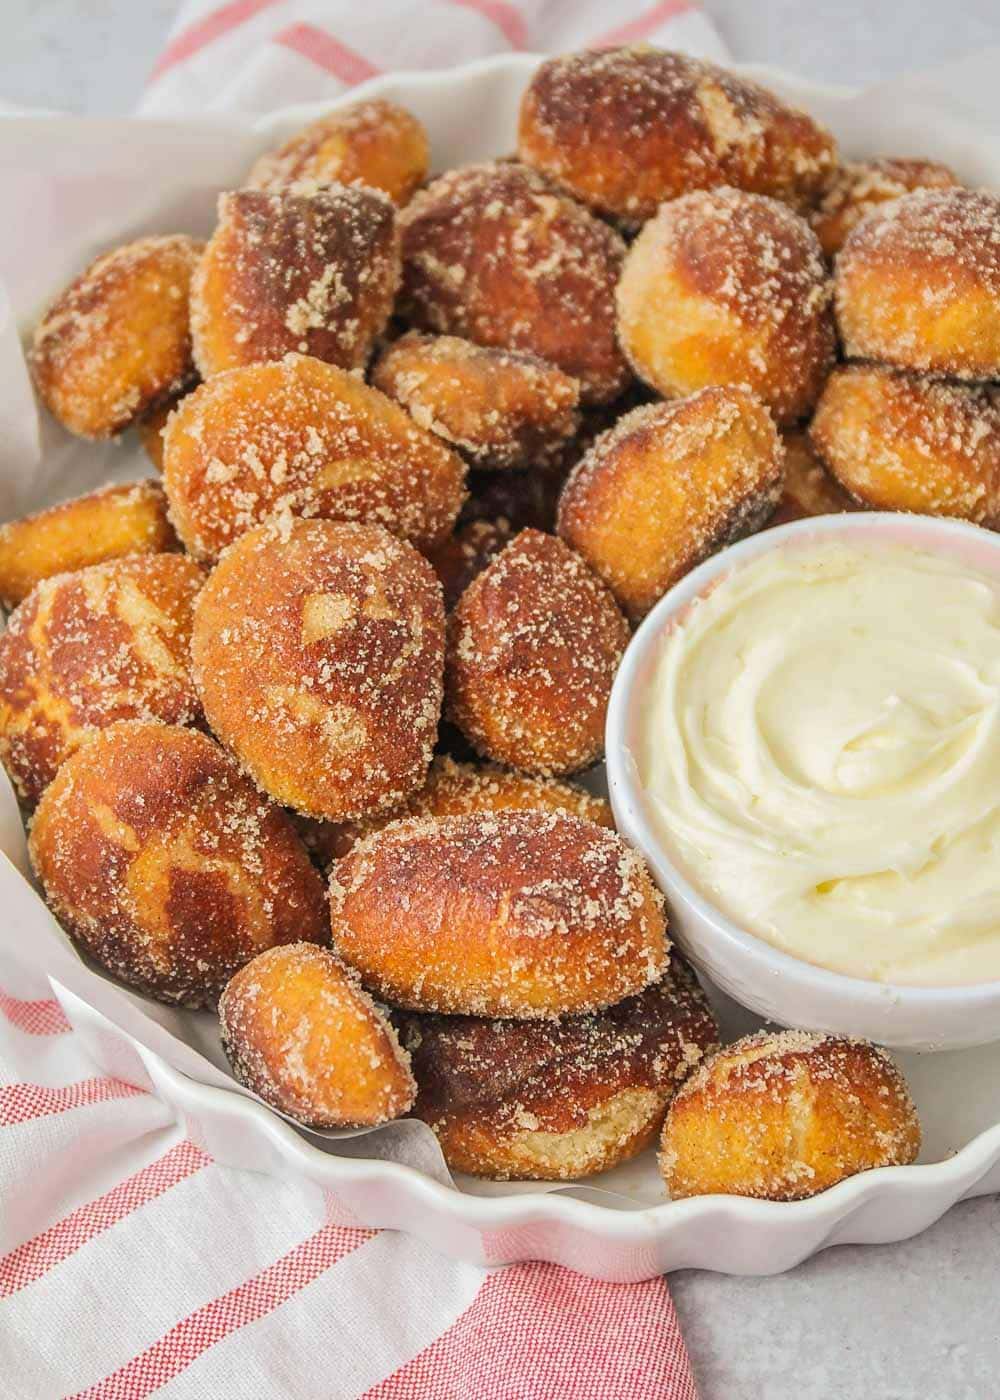 Auntie Anne's cinnamon sugar pretzel bites on a platter with a side of cream cheese dip